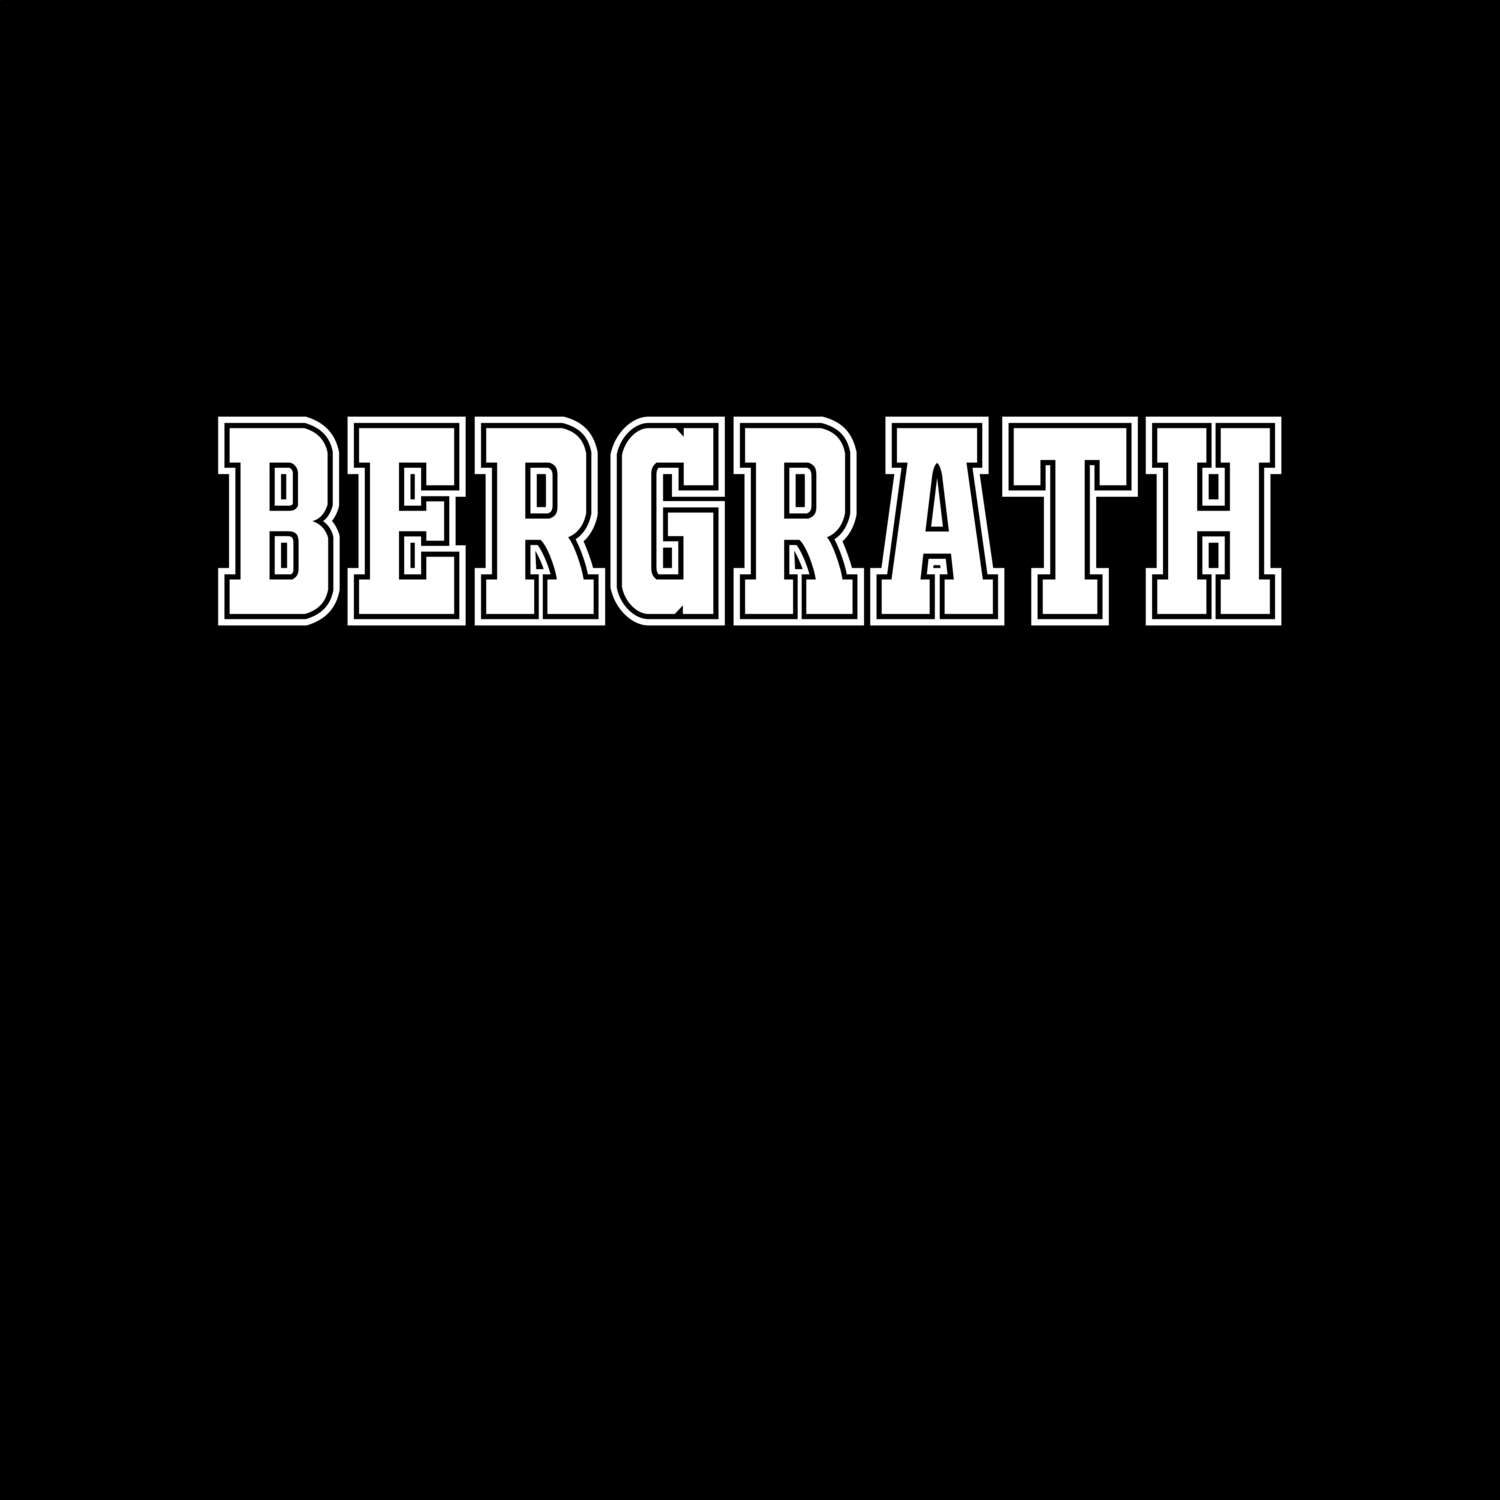 Bergrath T-Shirt »Classic«